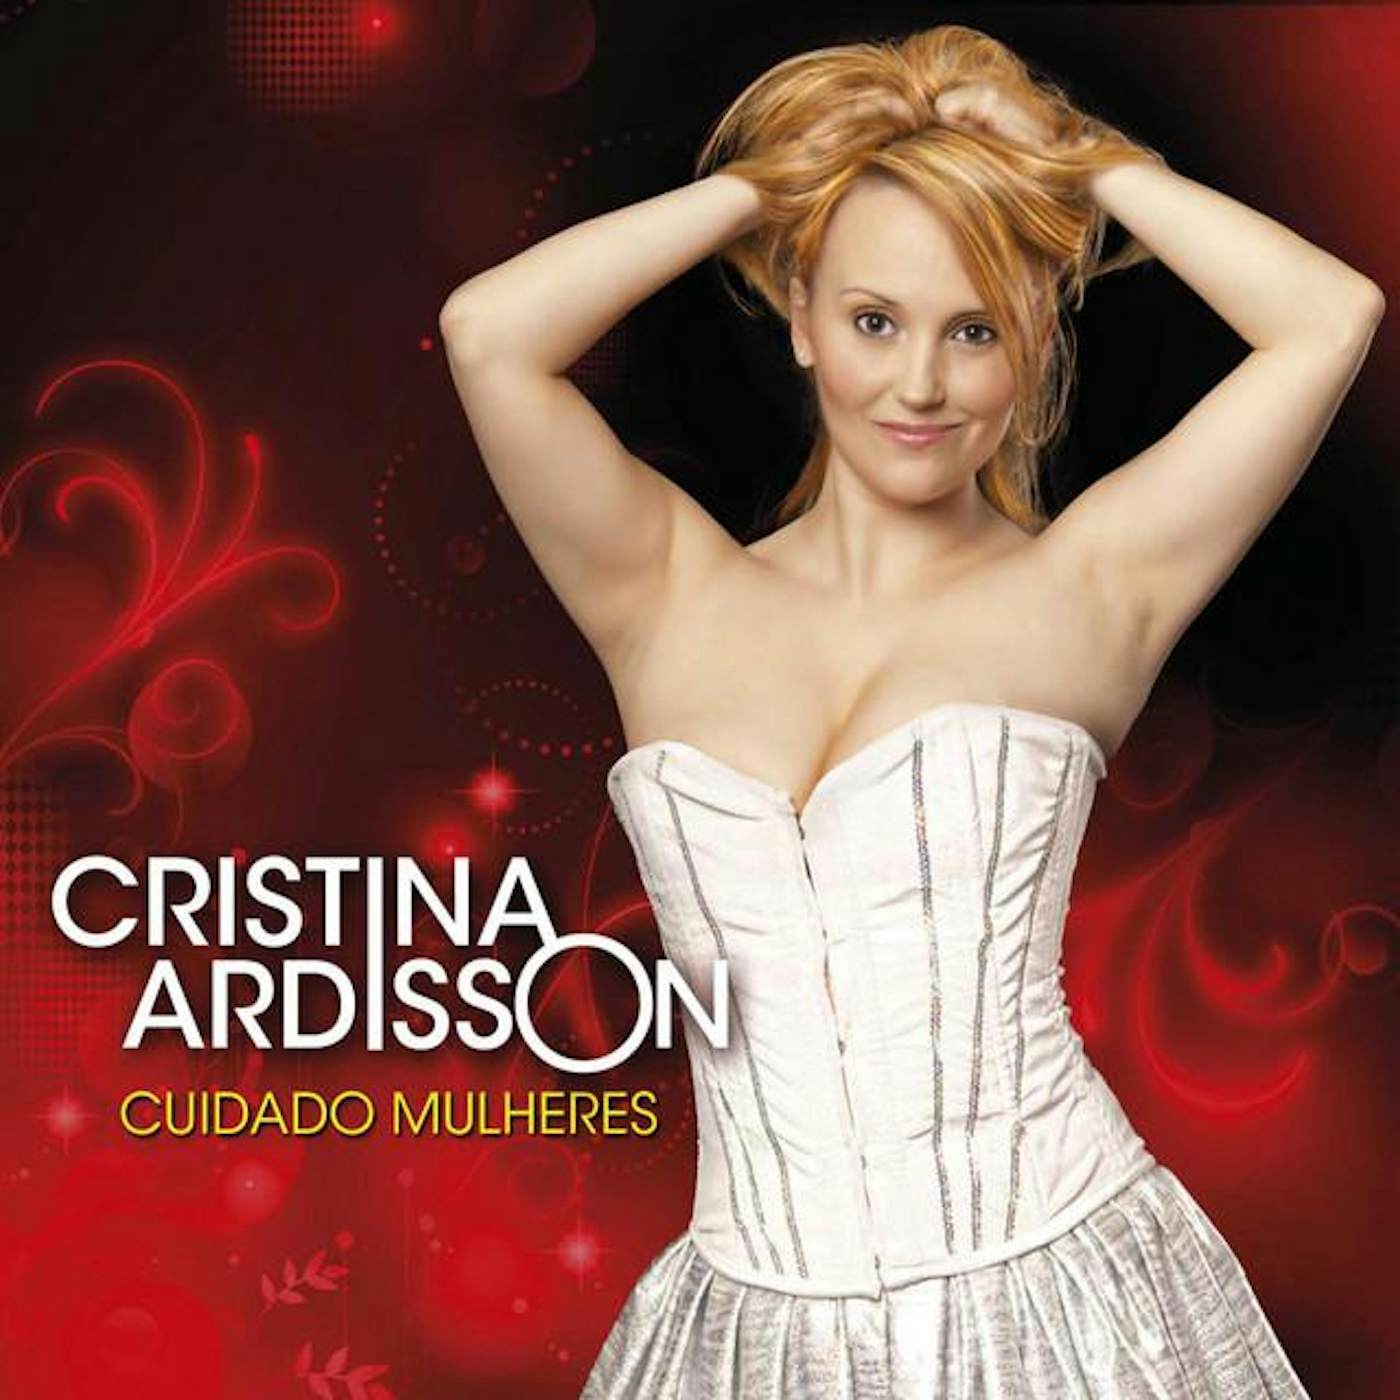 Cristina Ardisson